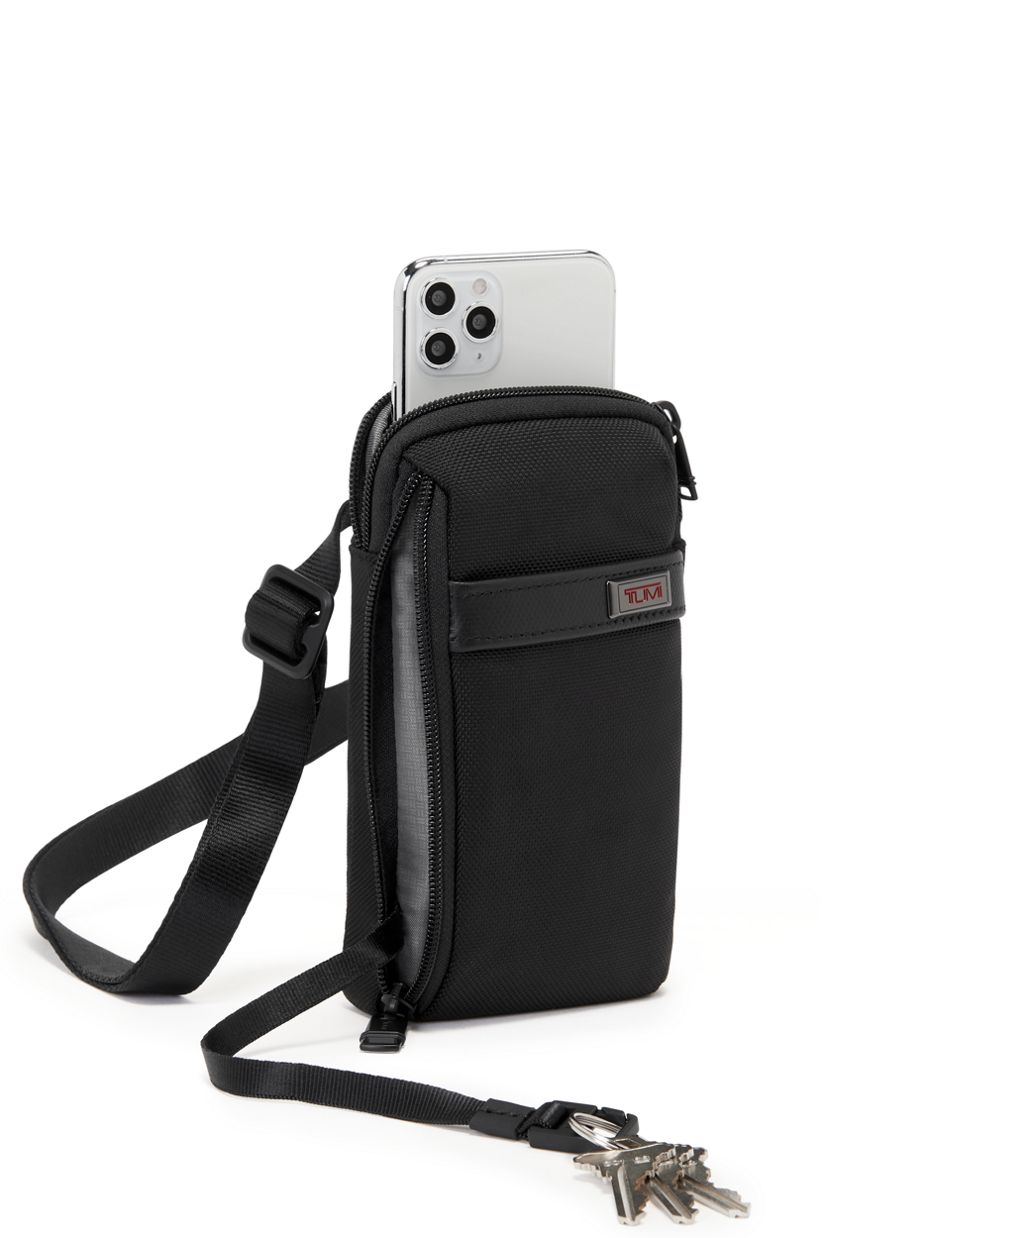 Mini Simple Hardside Square Shoulder Bag Suitcase Design Crossbody